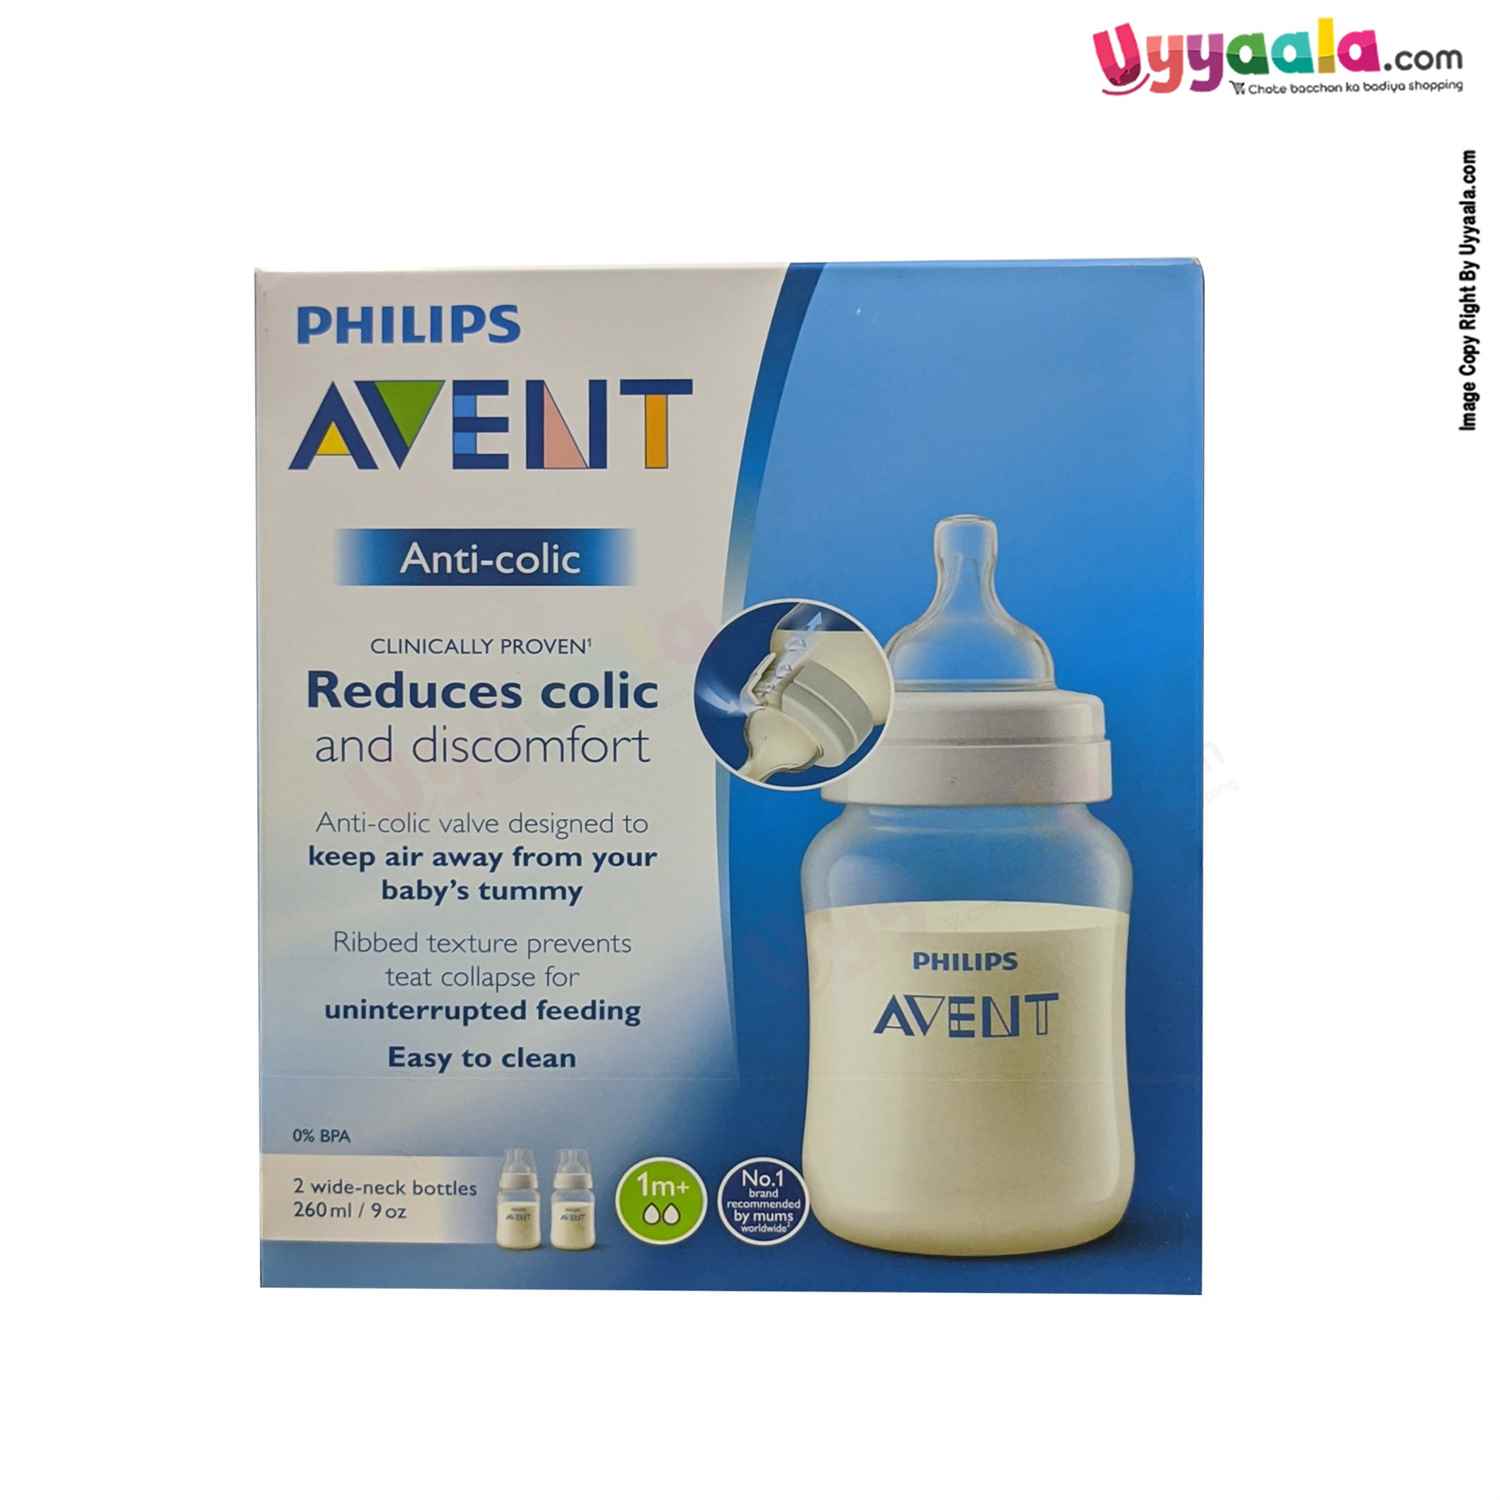 Buy Philips AVENT Anti-colic Baby Milk Feeding Bottle - 260ml Online in India at uyyaala.com